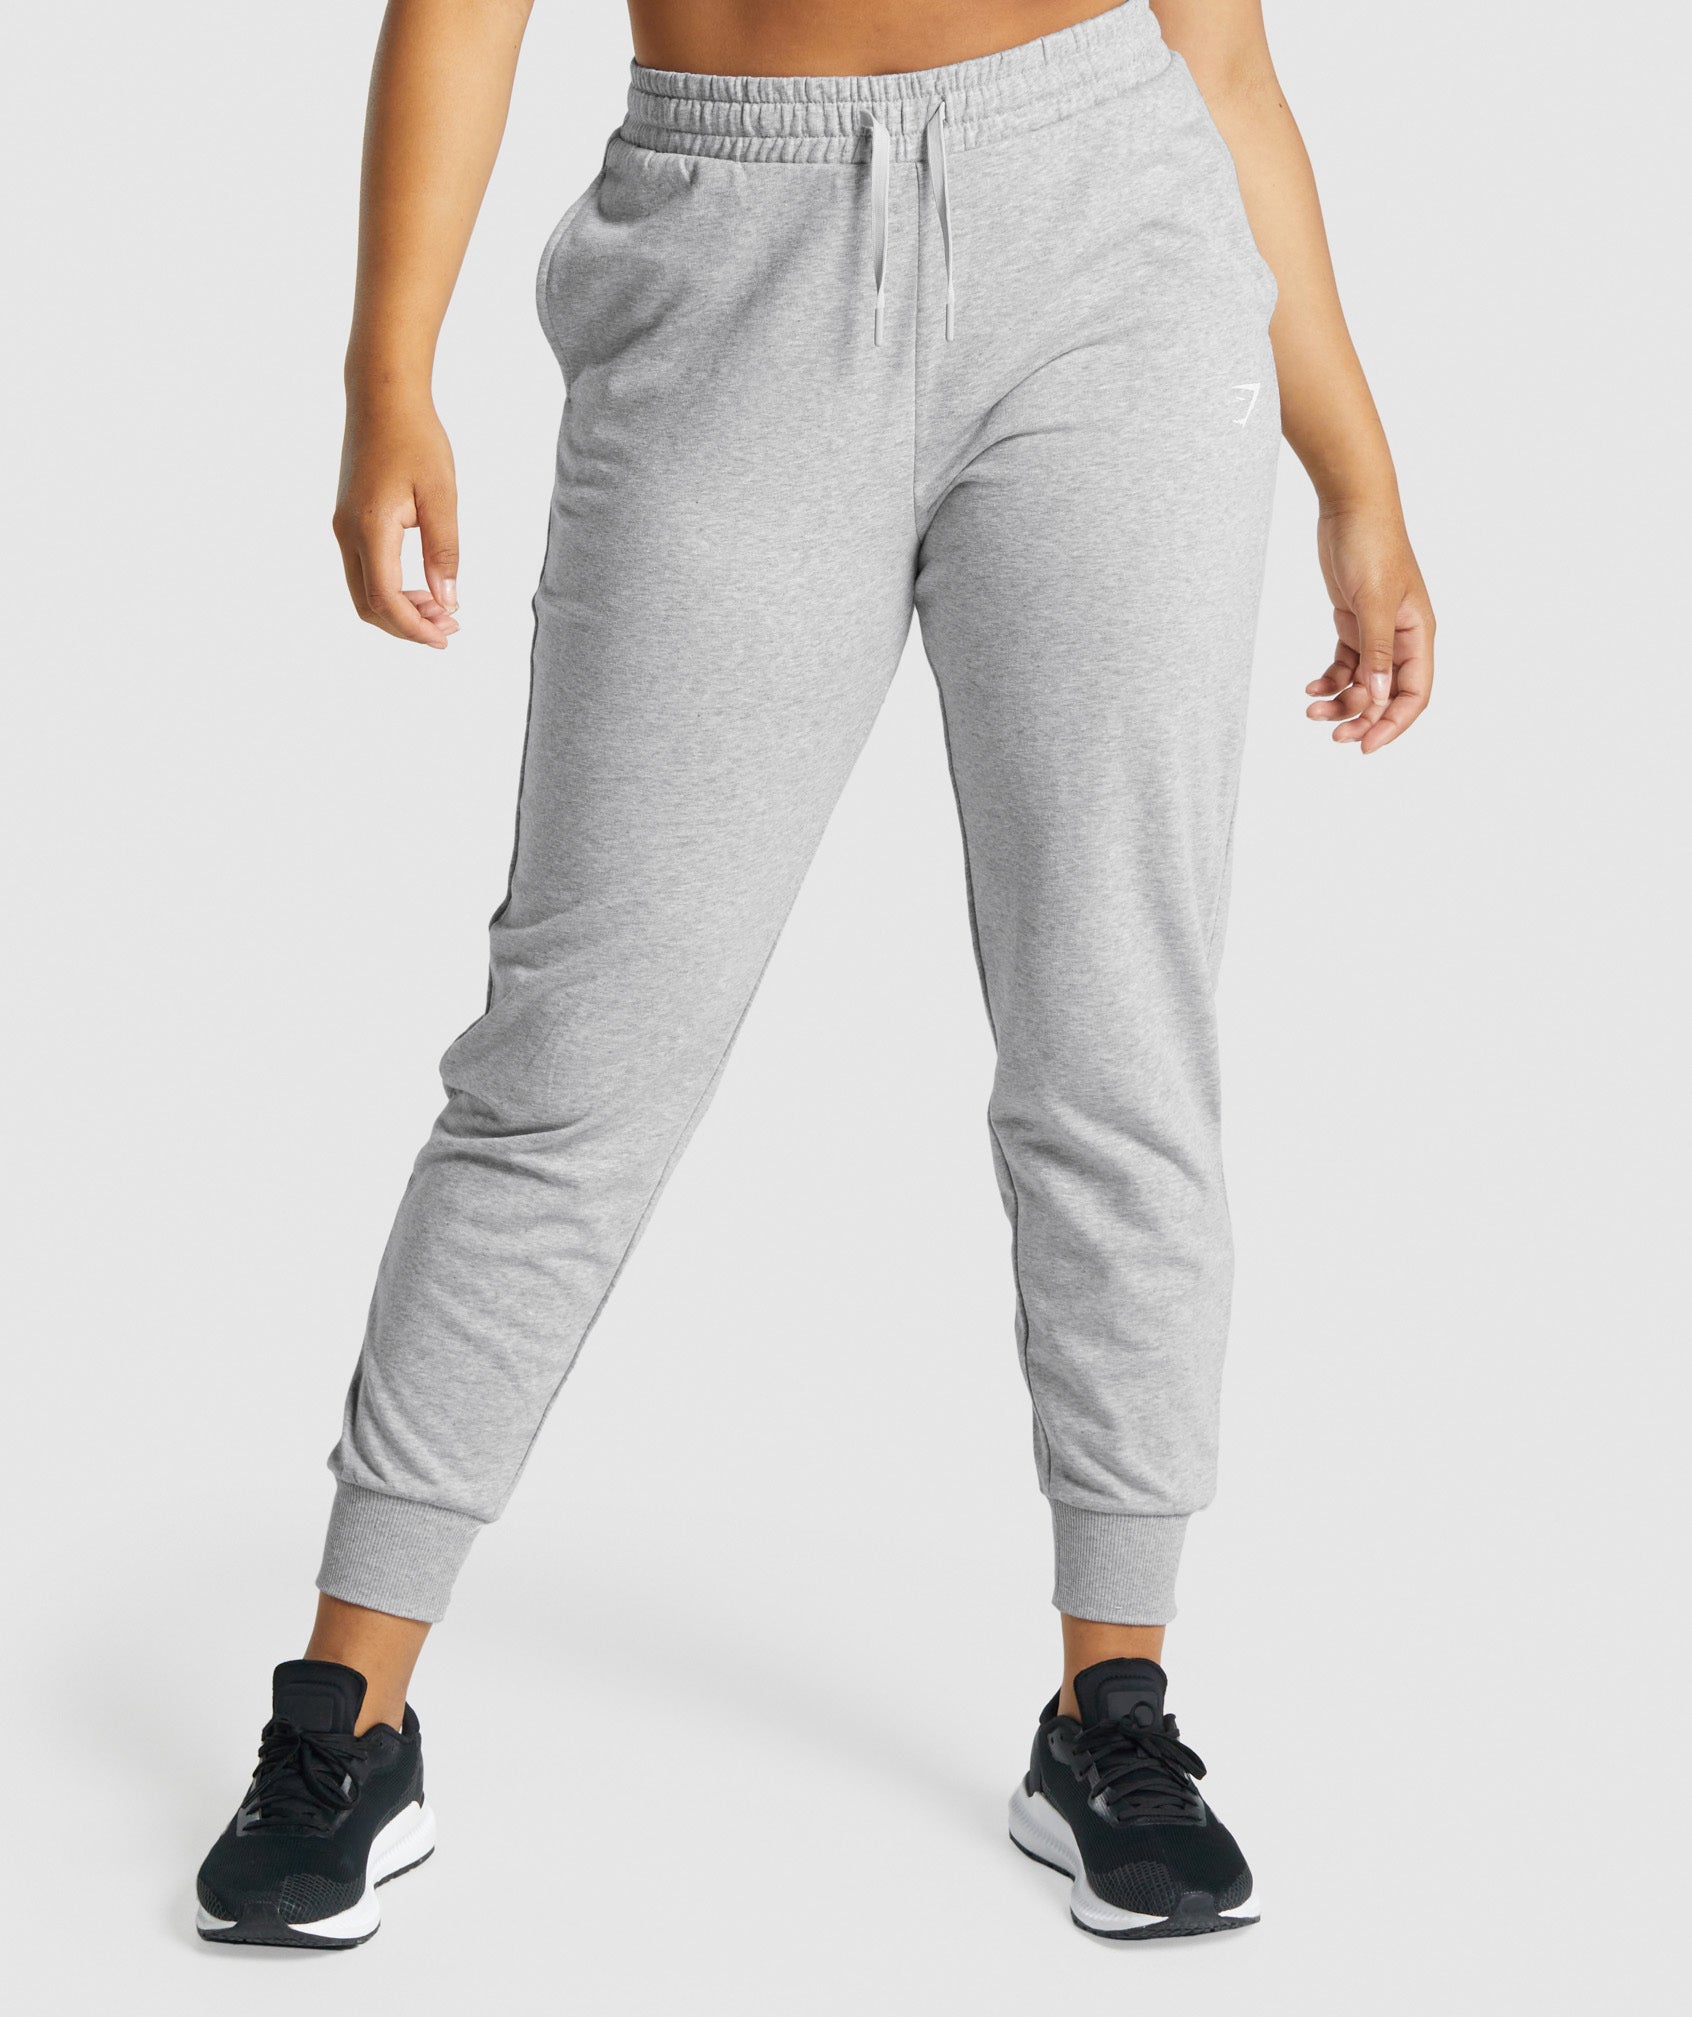 Women's sweatpants PLR070 - light grey melange